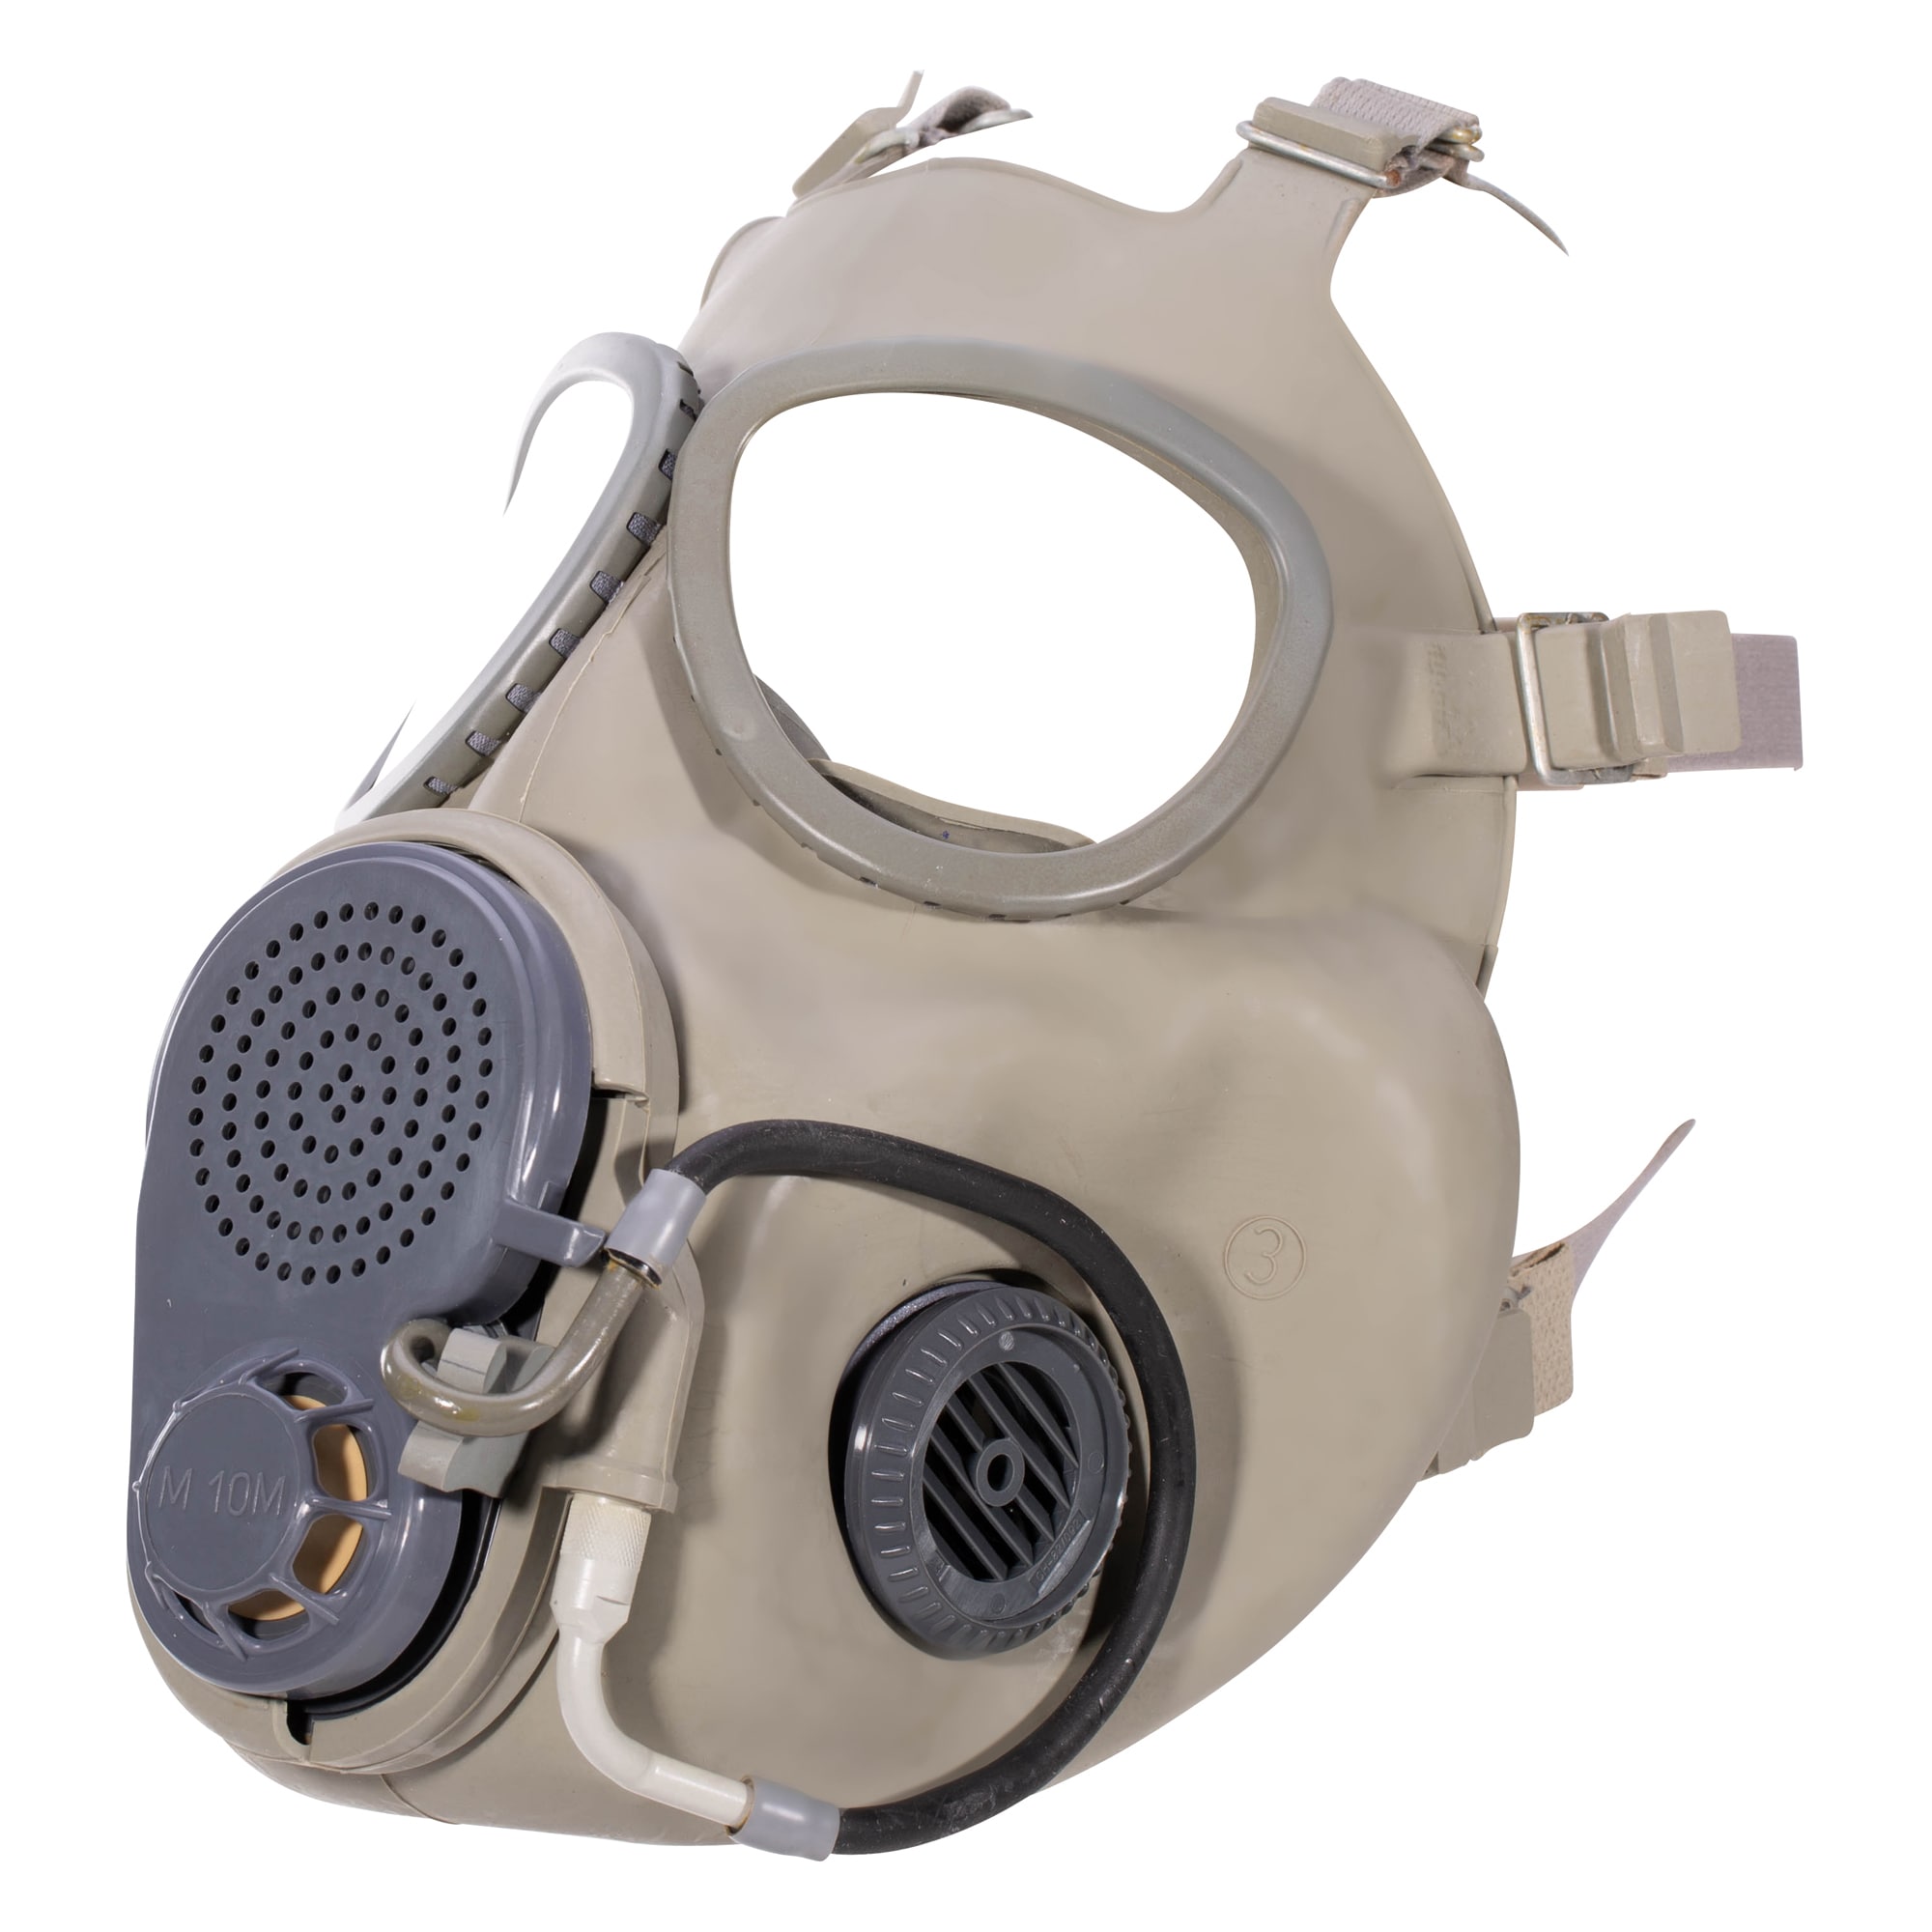 på ventil Menda City Purchase the Czech Gas Mask M10M by ASMC